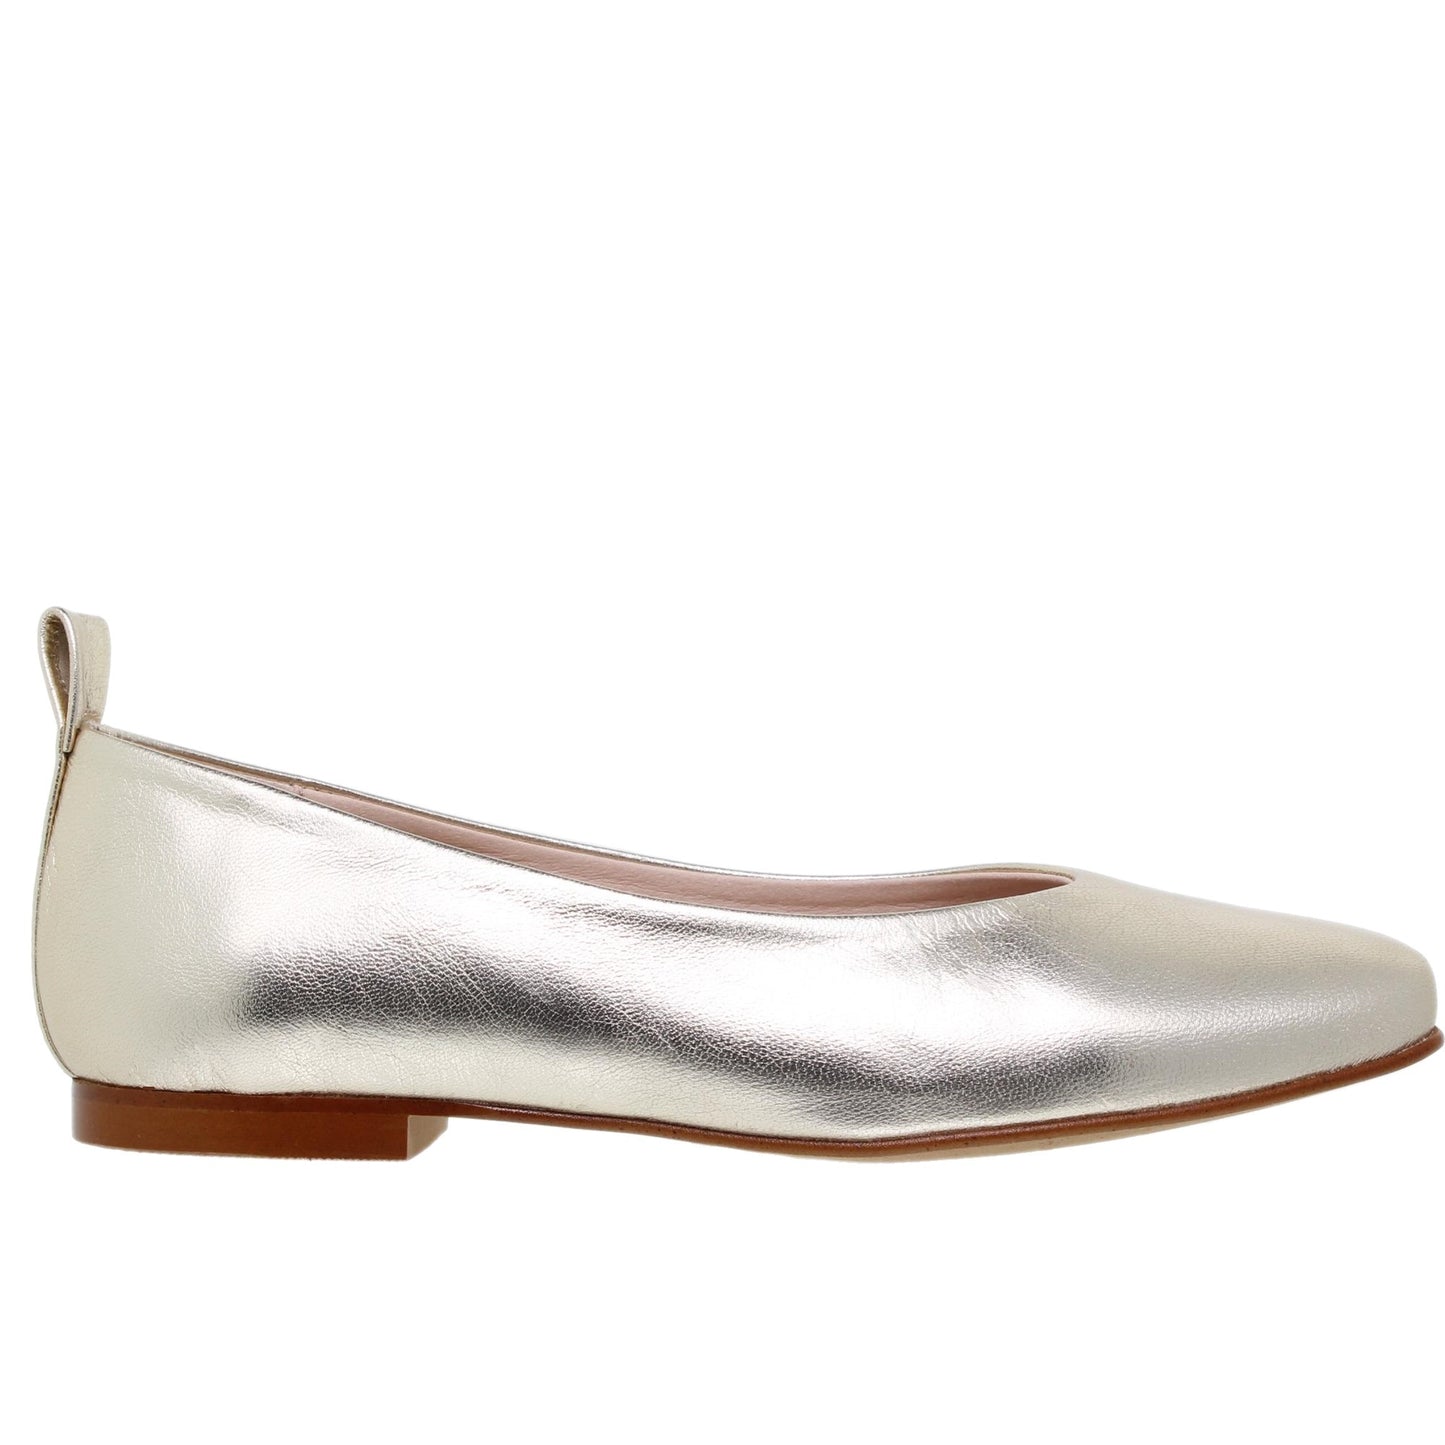 Zapato plano bailarina piel mujer metalizado oro Magnolia